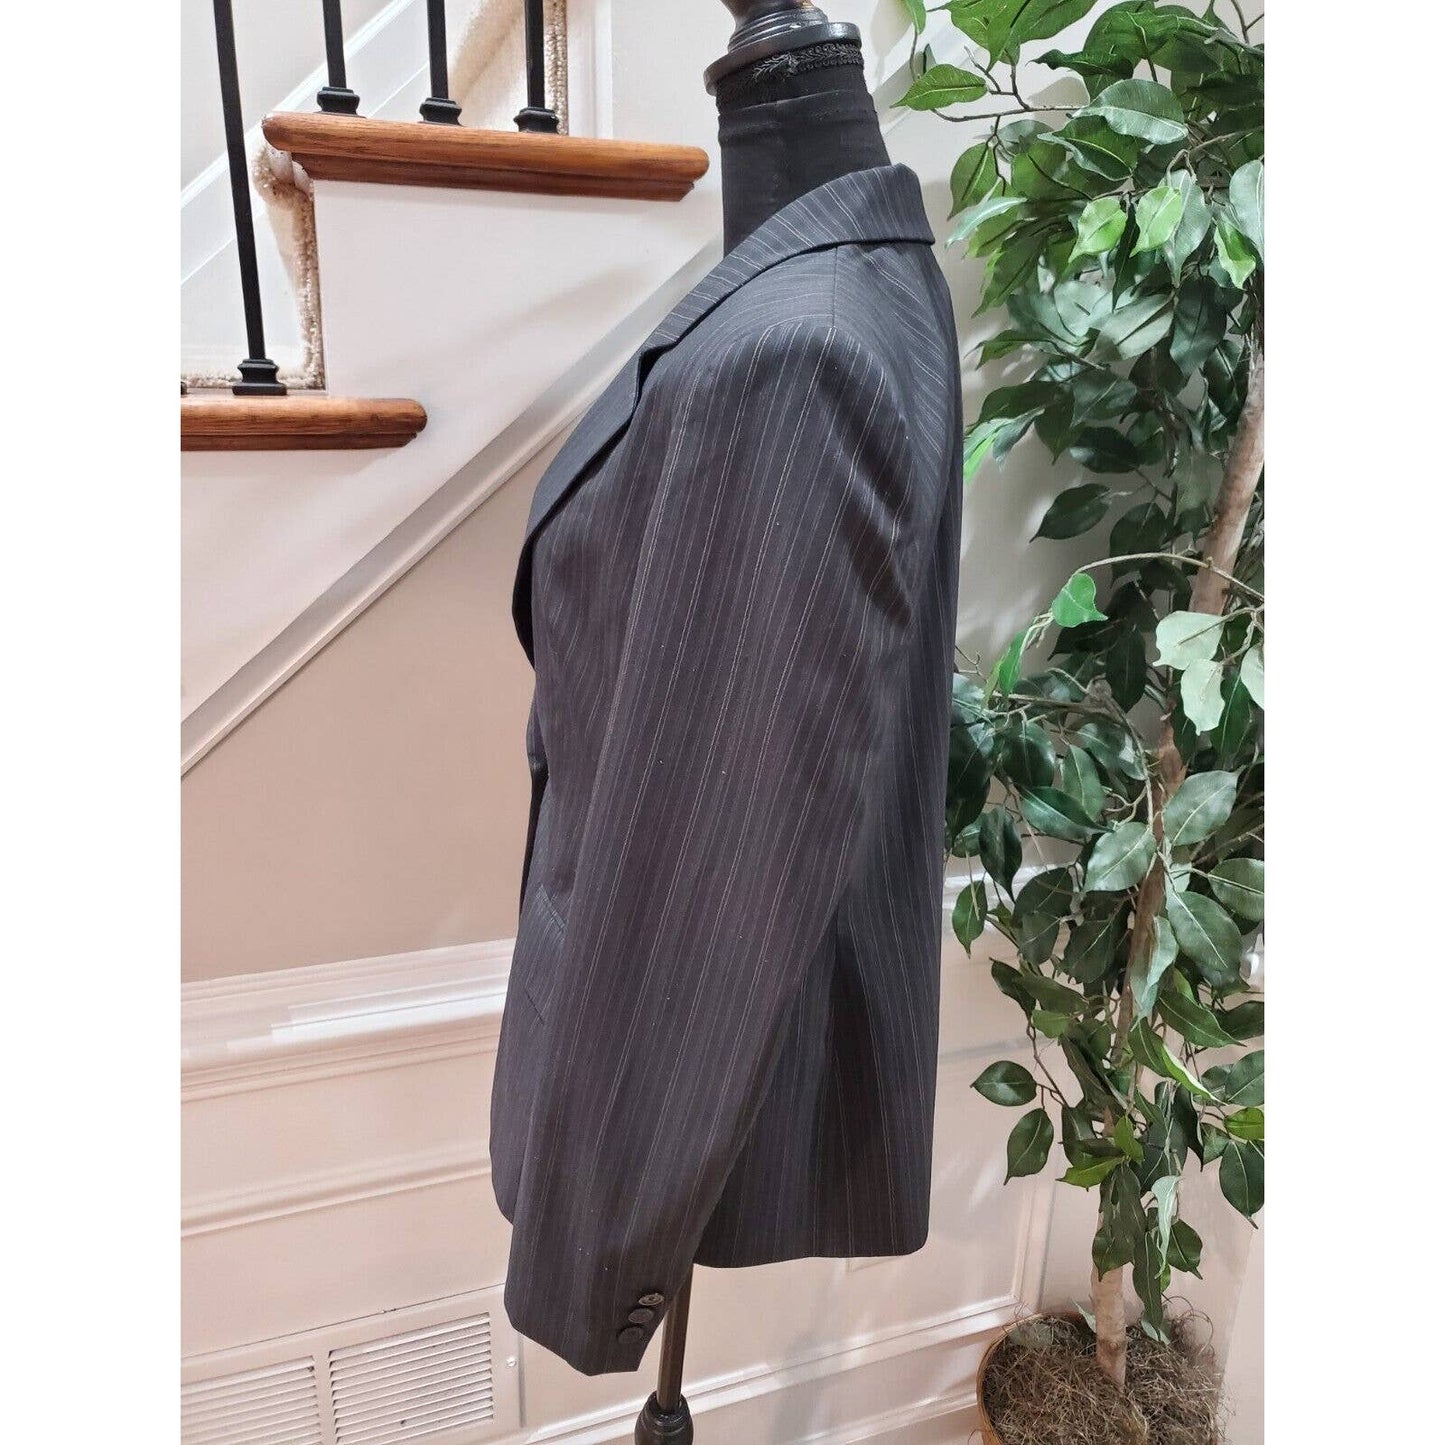 Anne Klein Women's Black Polyester Long Sleeve Single Breasted Jacket Blazer 10